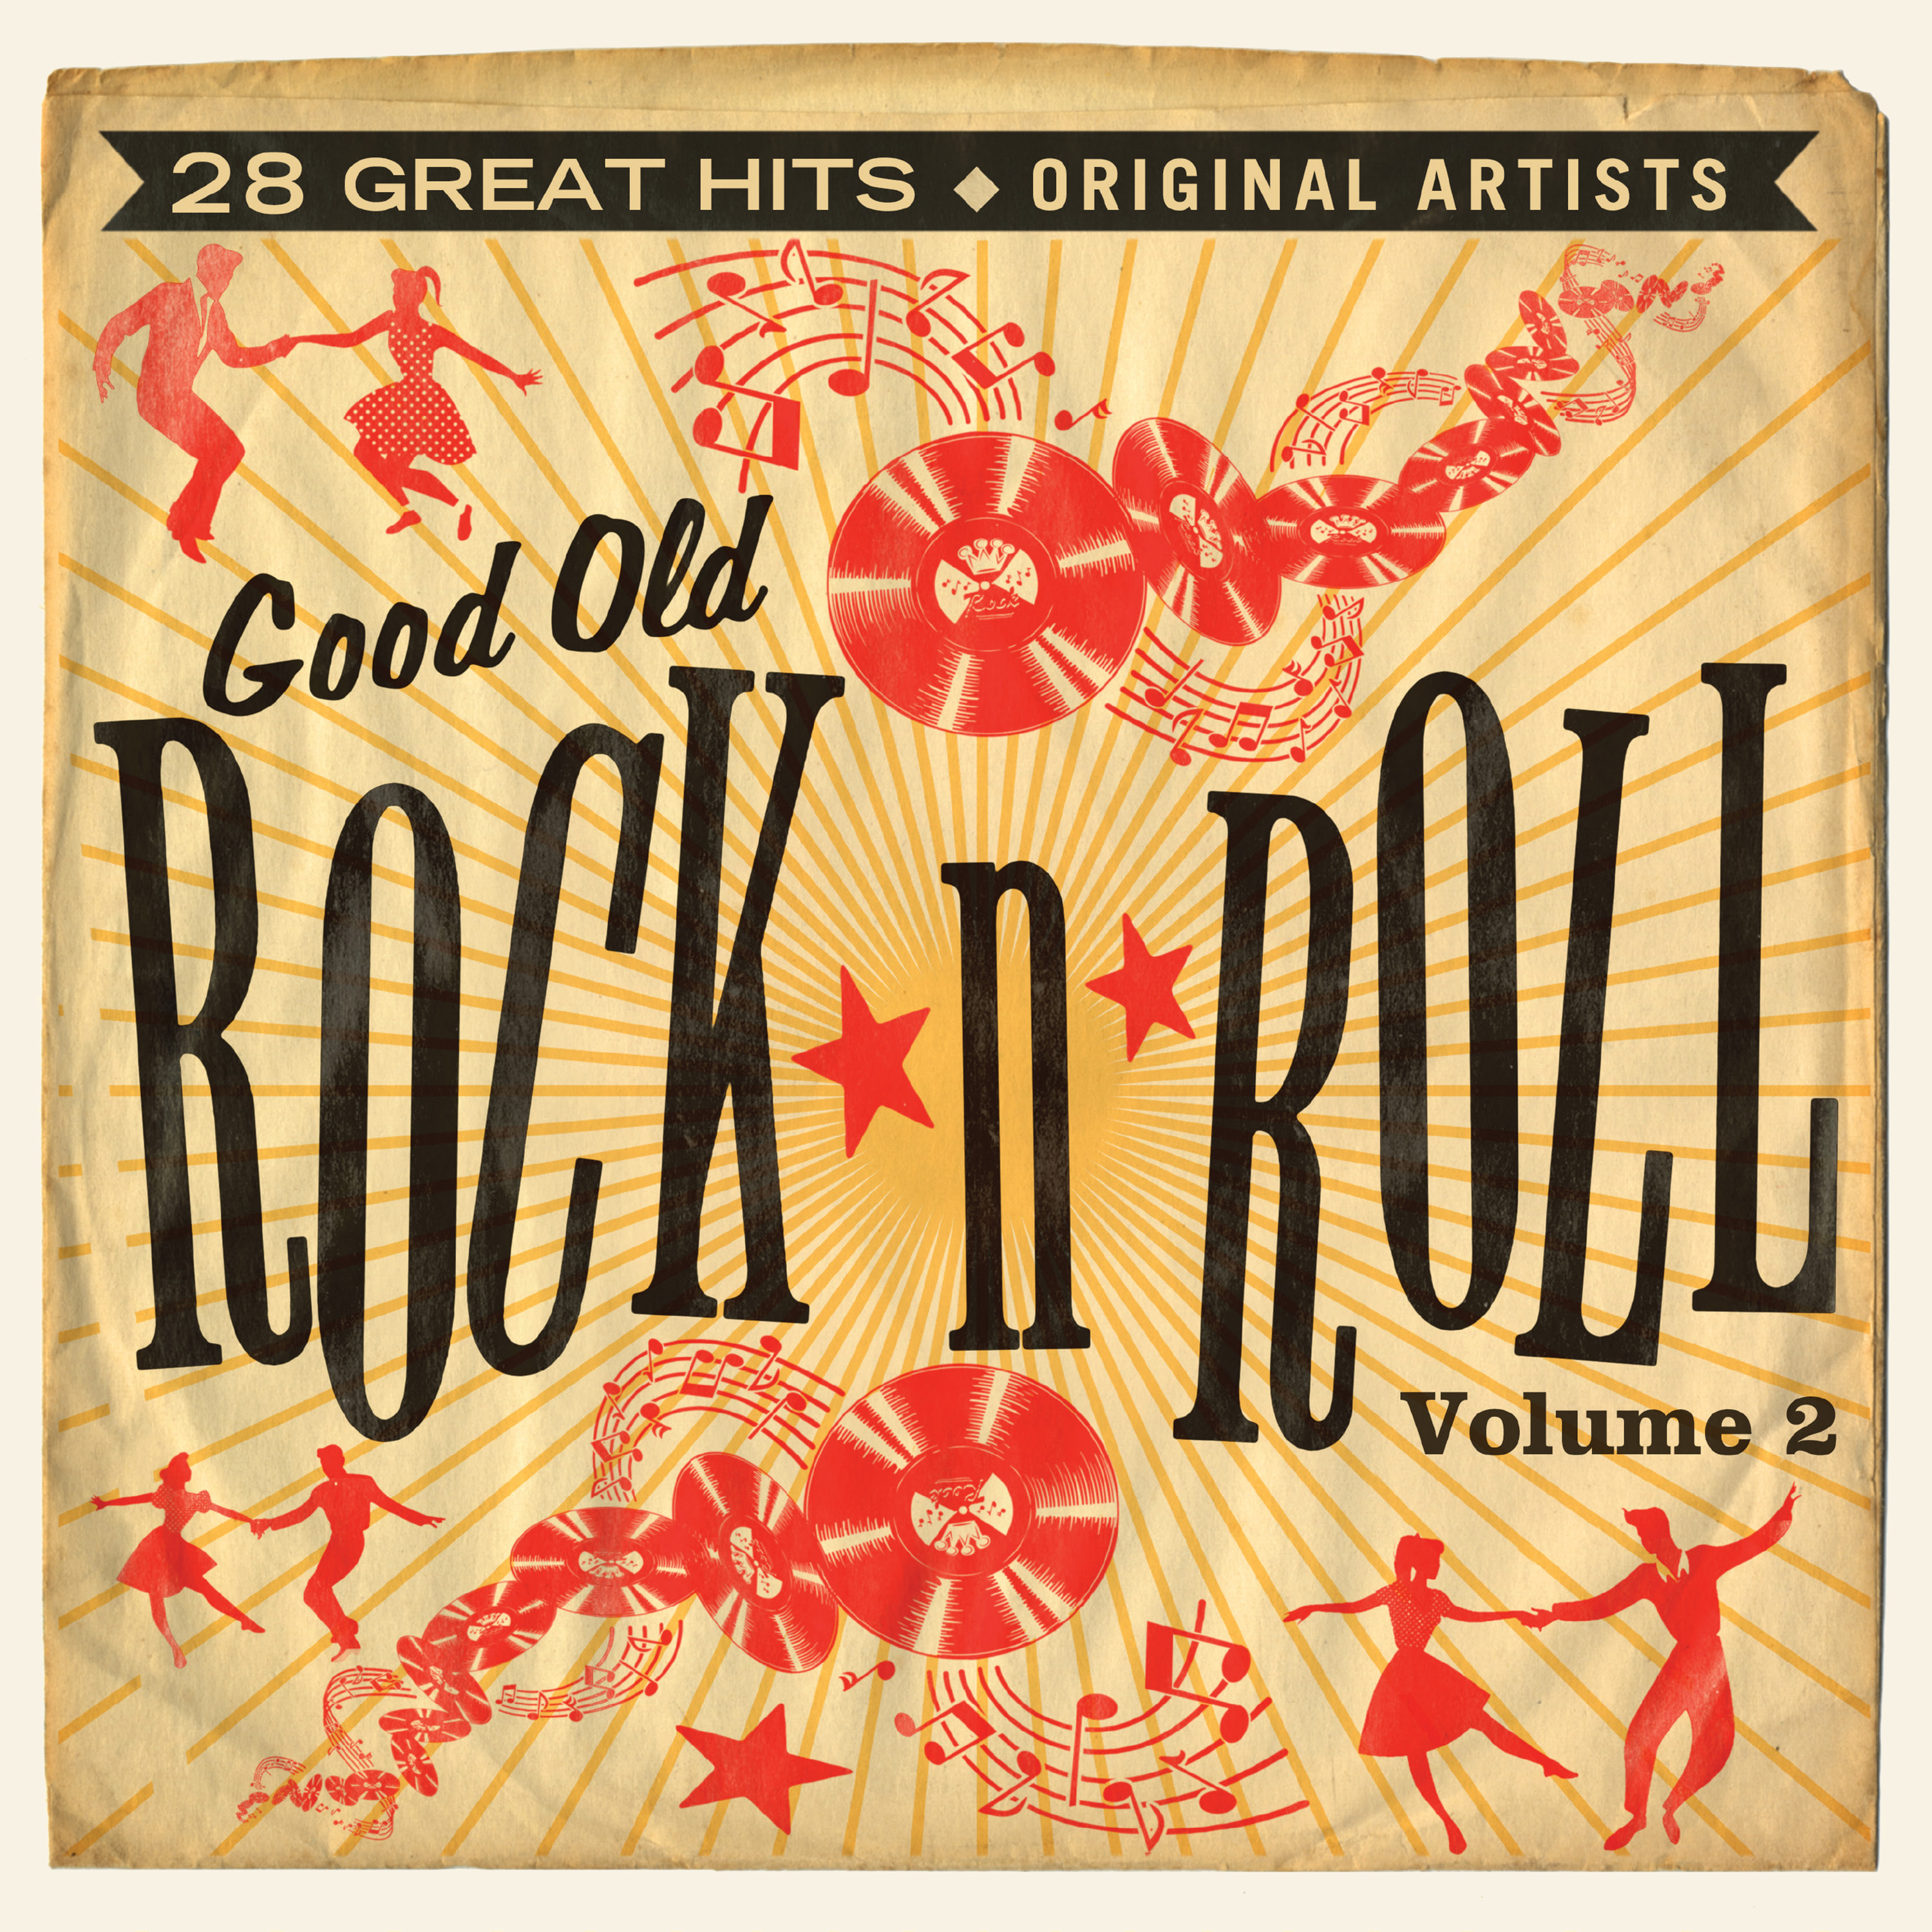 Good Old Rock 'n' Roll Volume 2